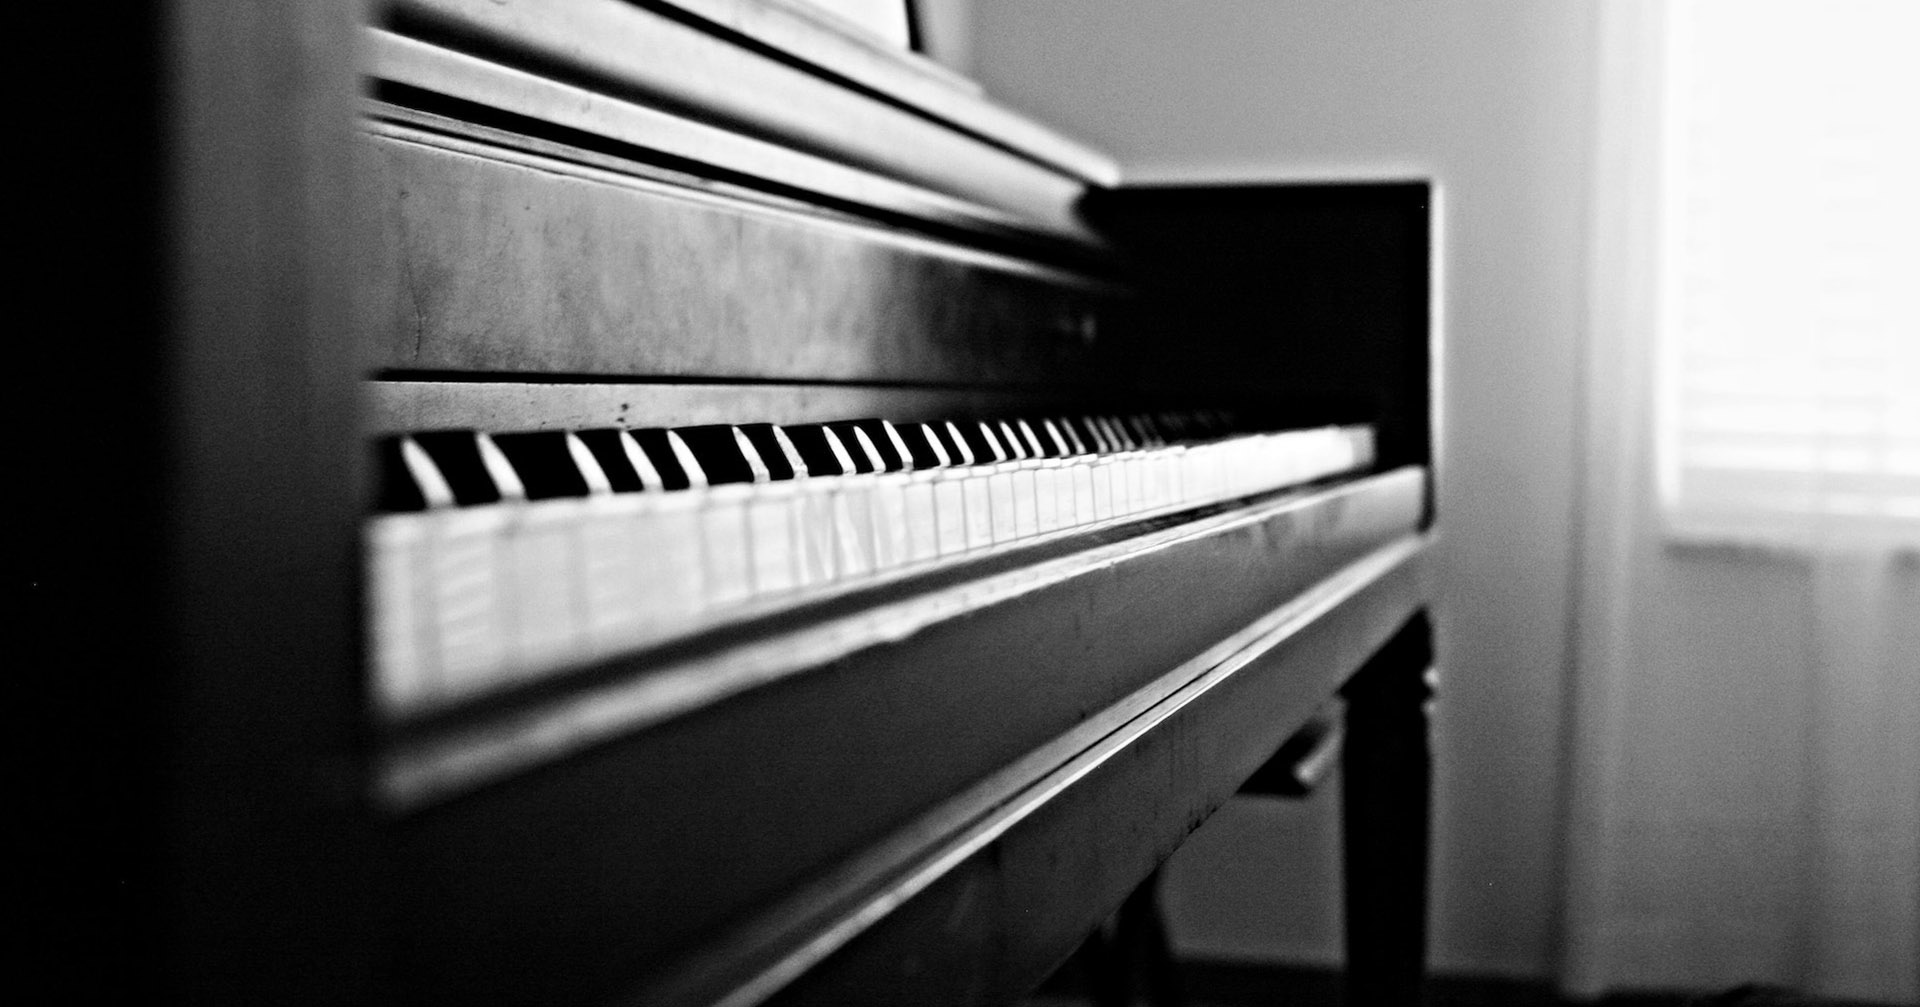 magasin de musique nice-pianos a queue monaco-pianos d occasion antibes-pianos numeriques saint tropez-location de piano frejus-accordeur piano toulon-acheter piano alpes maritimes